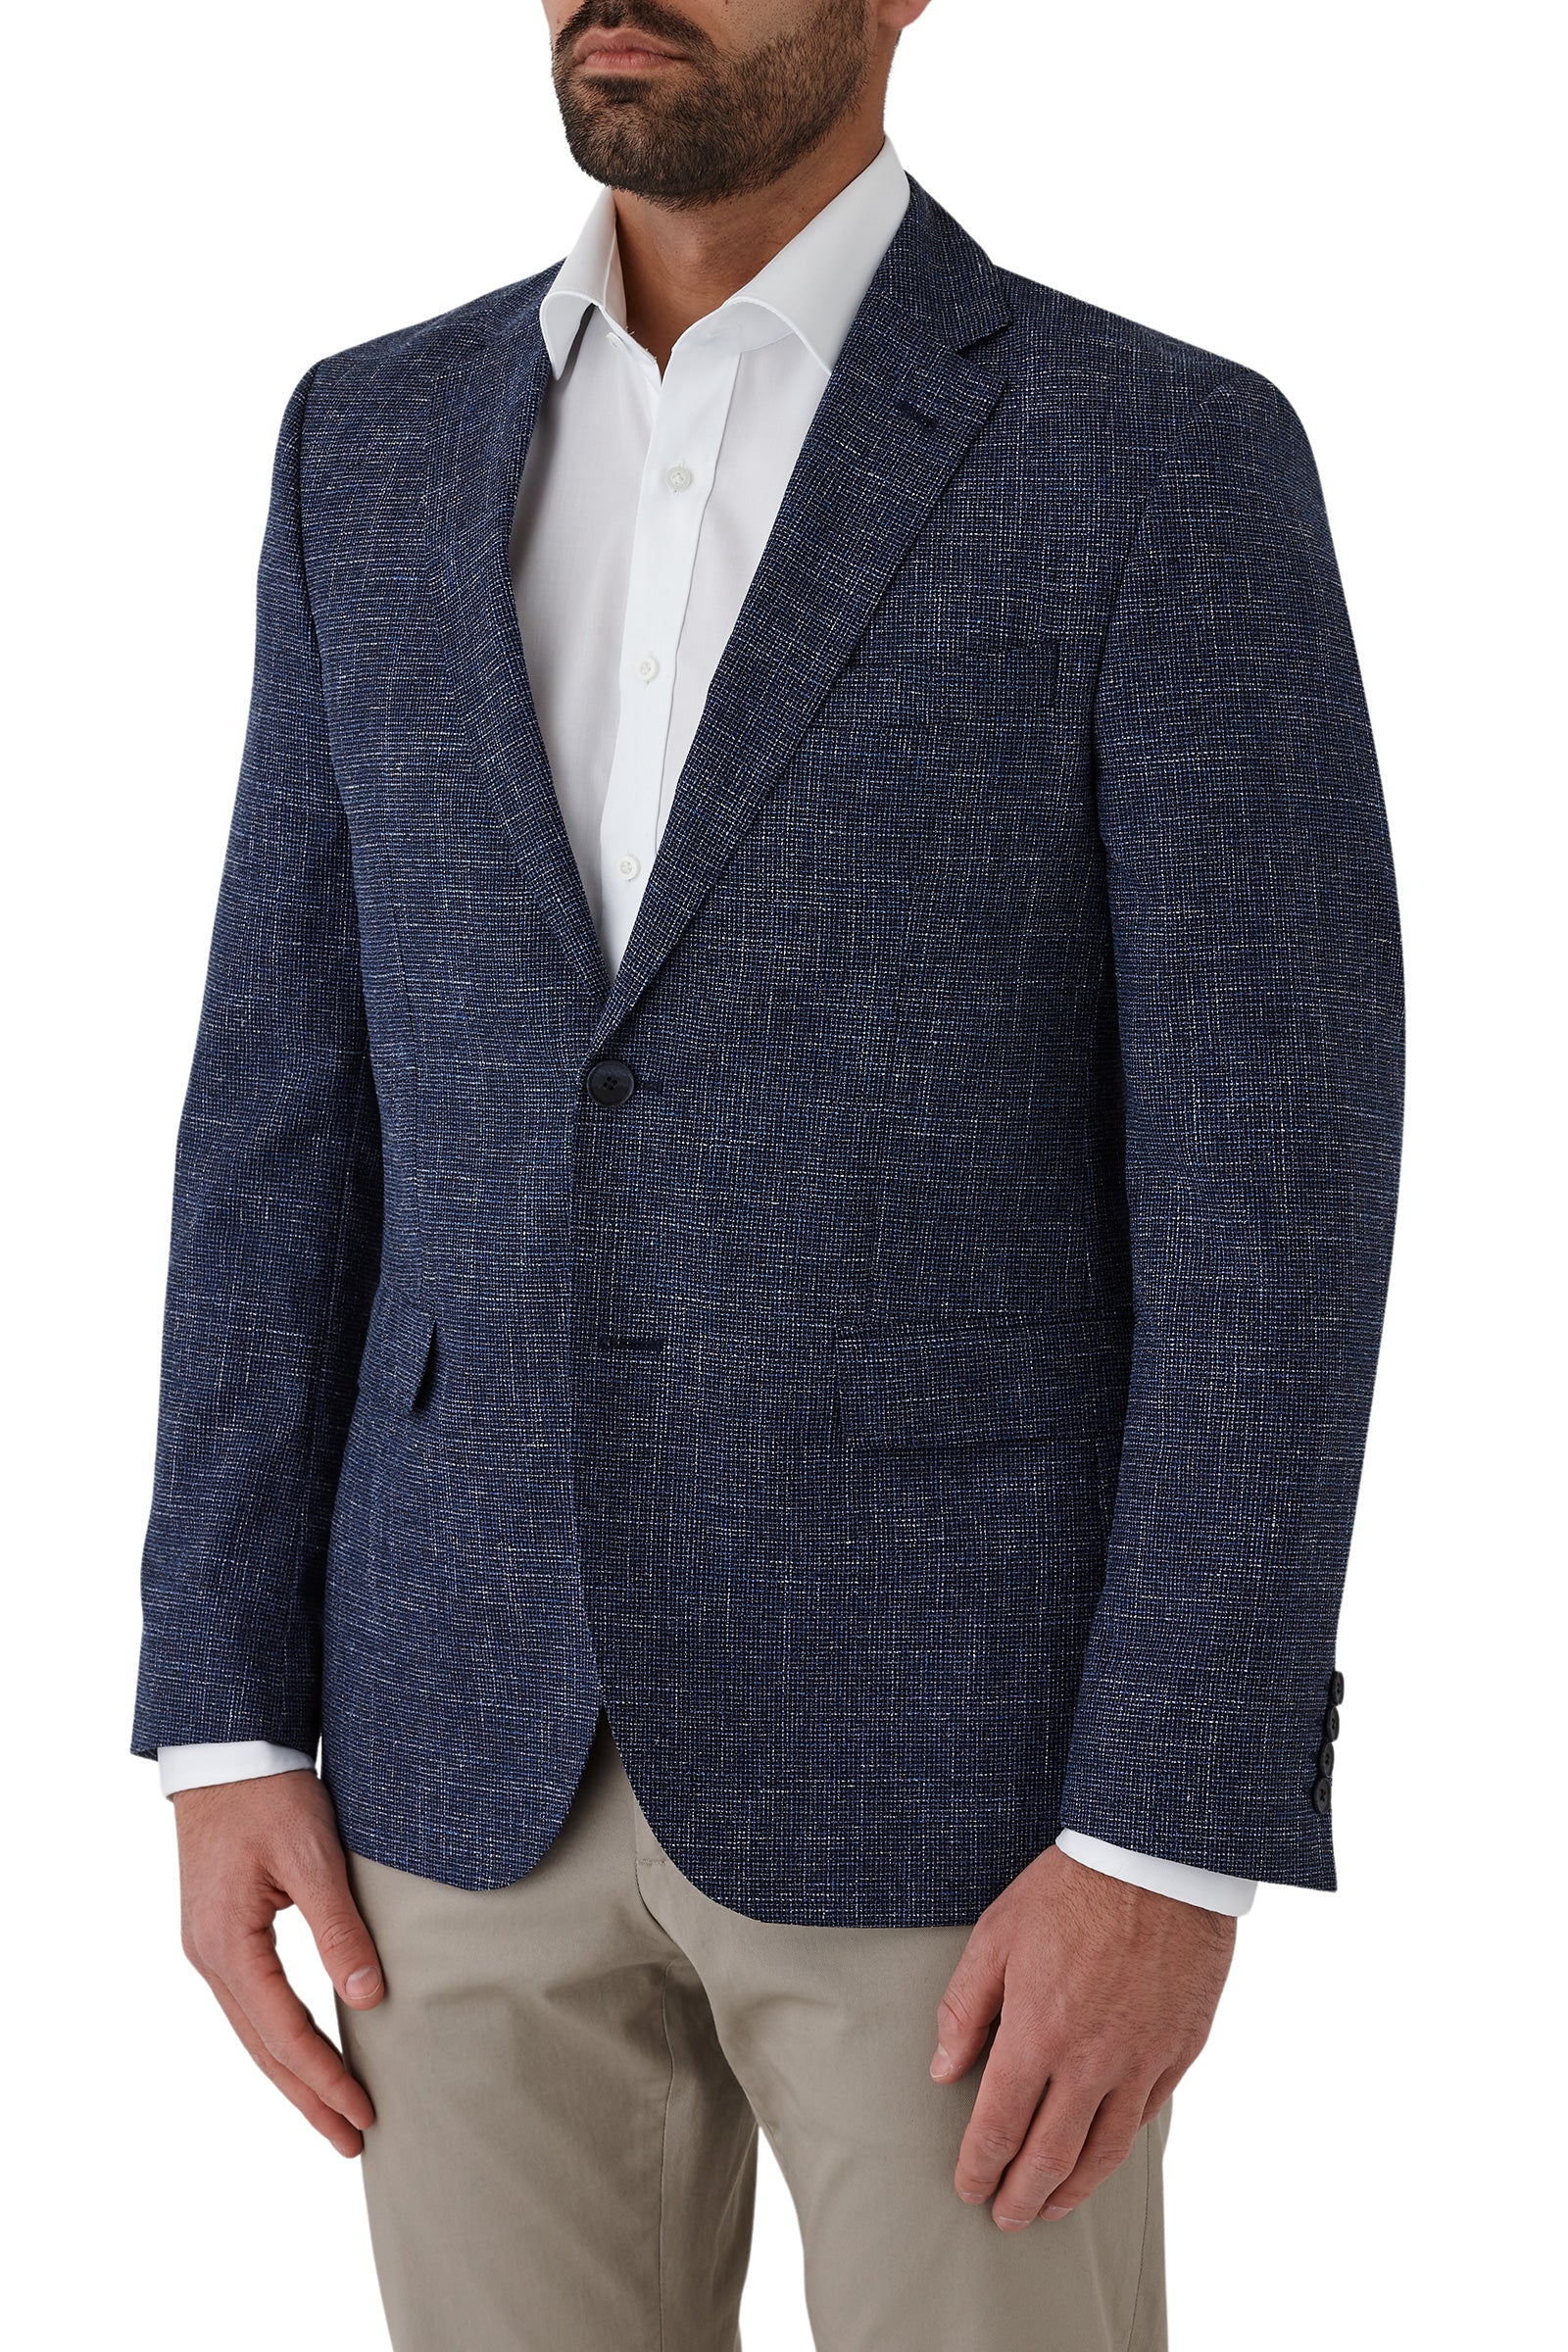 Hawthorn Jacket Blue Wool/Cotton/Linen